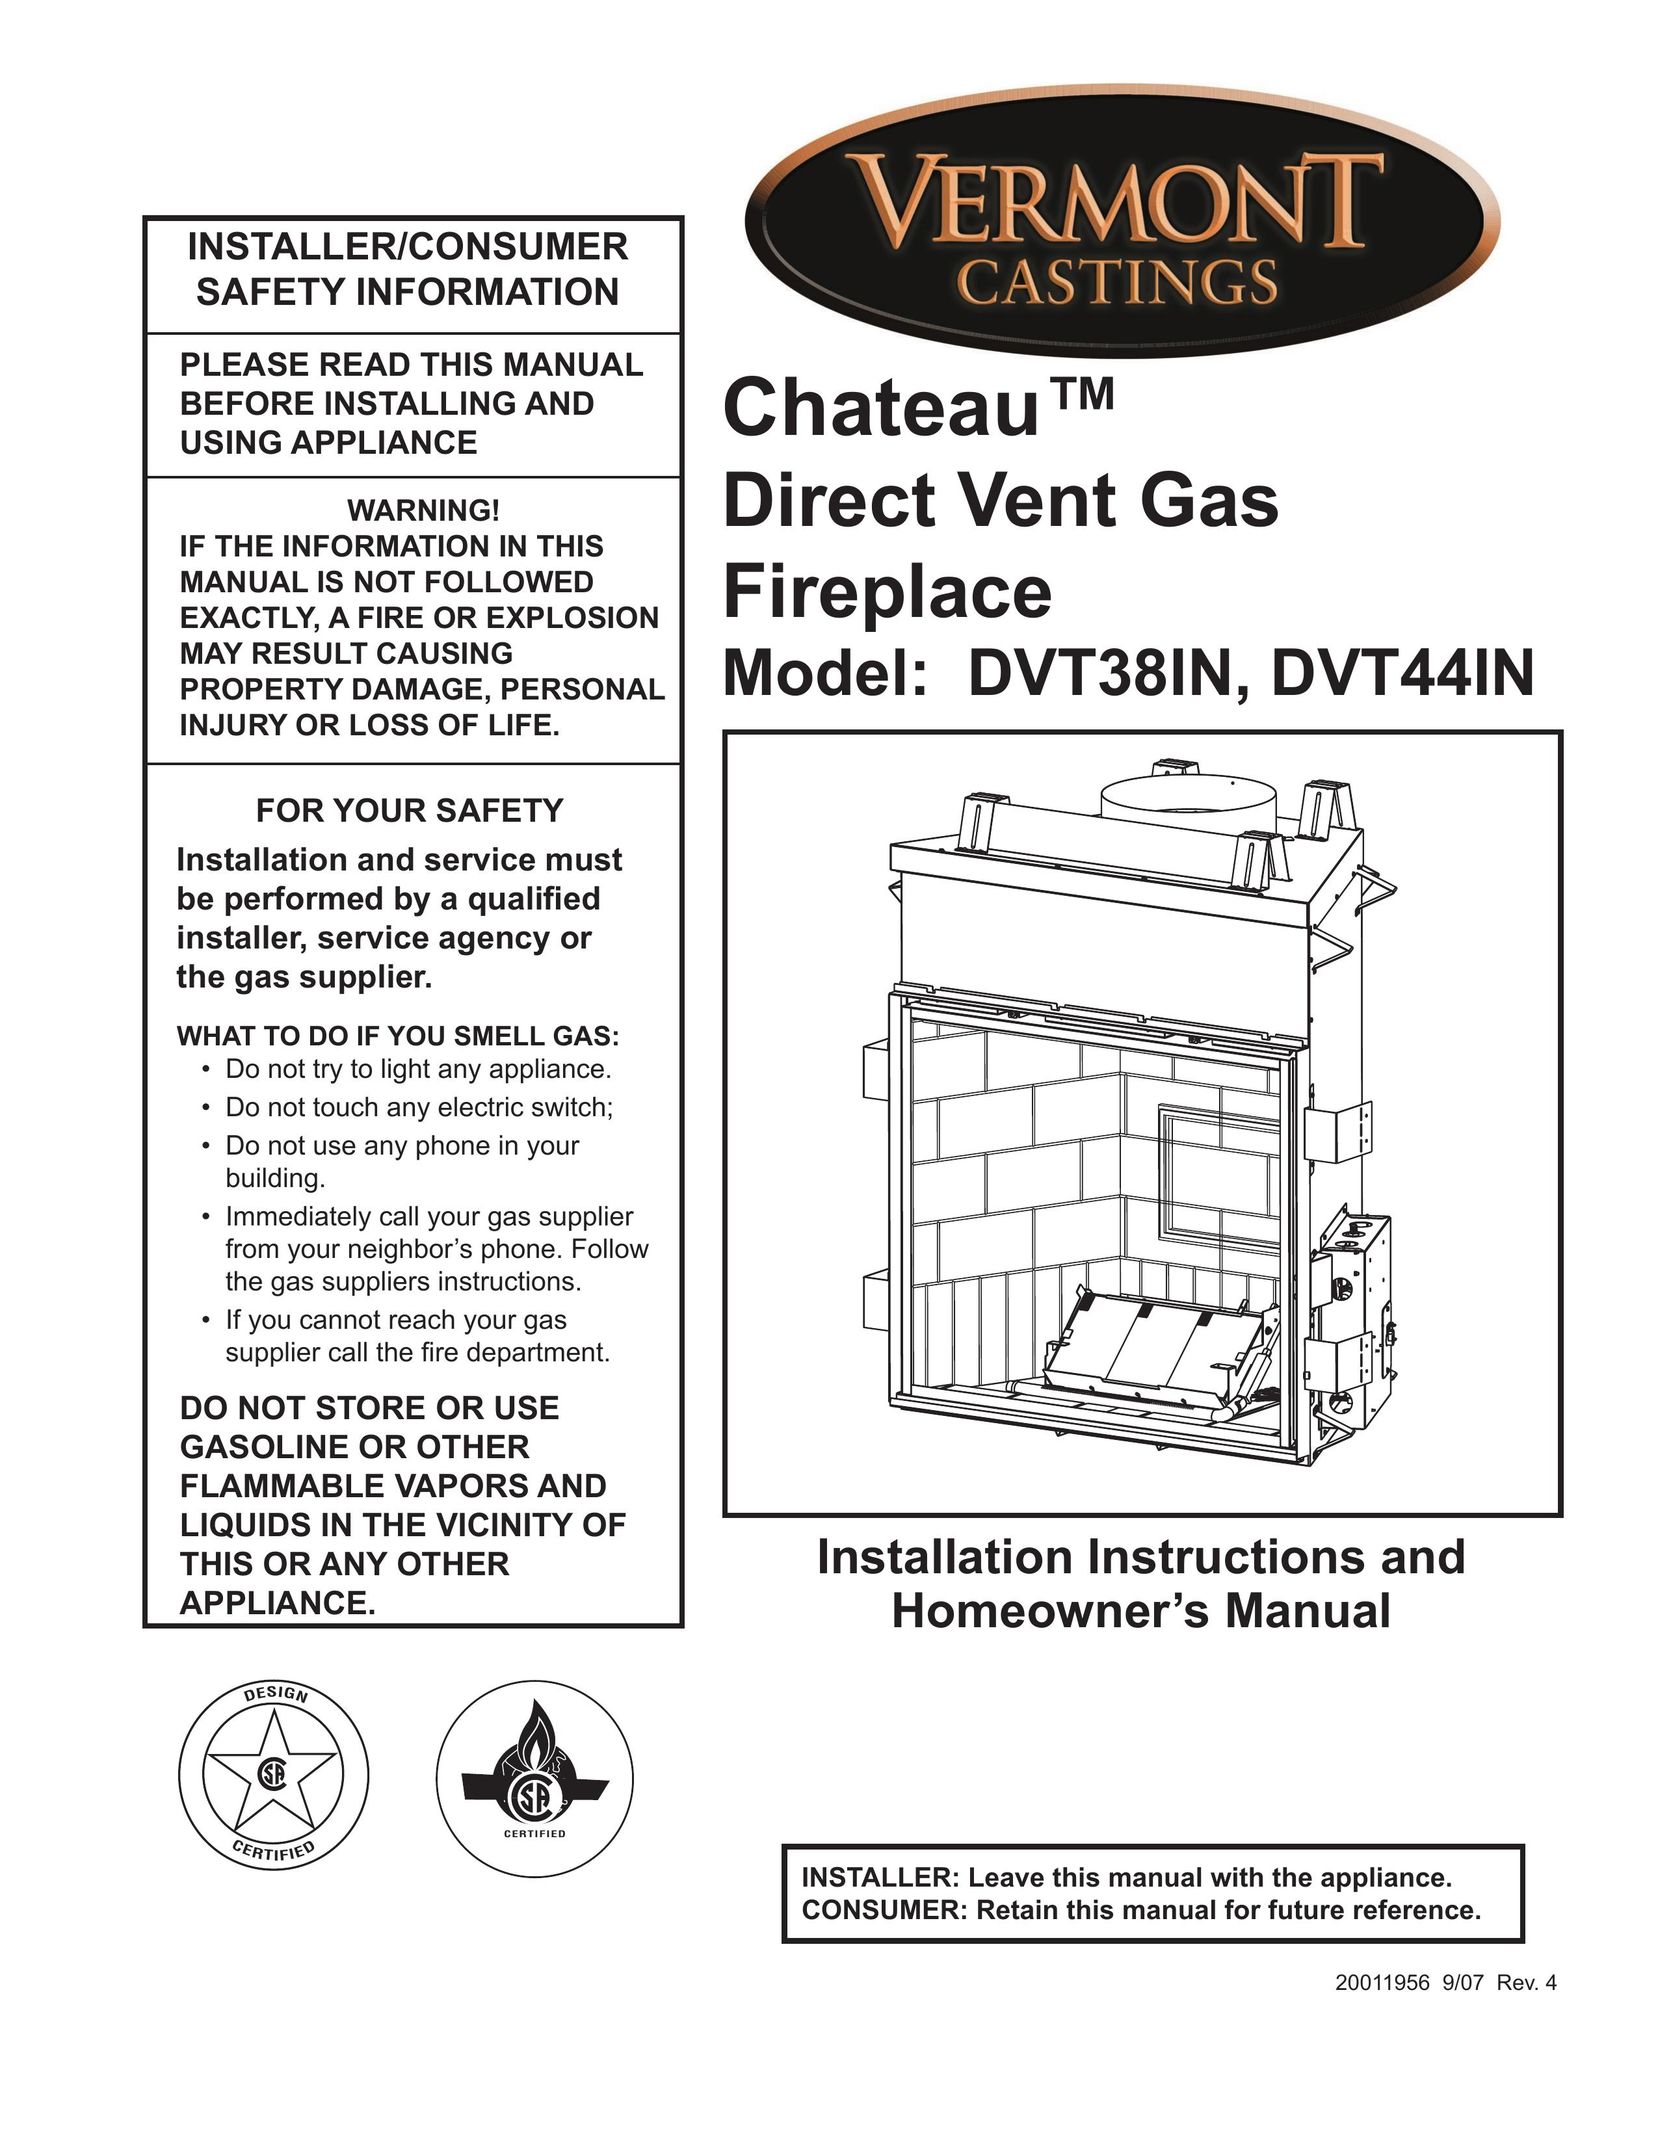 CFM Corporation DVT38IN Indoor Fireplace User Manual